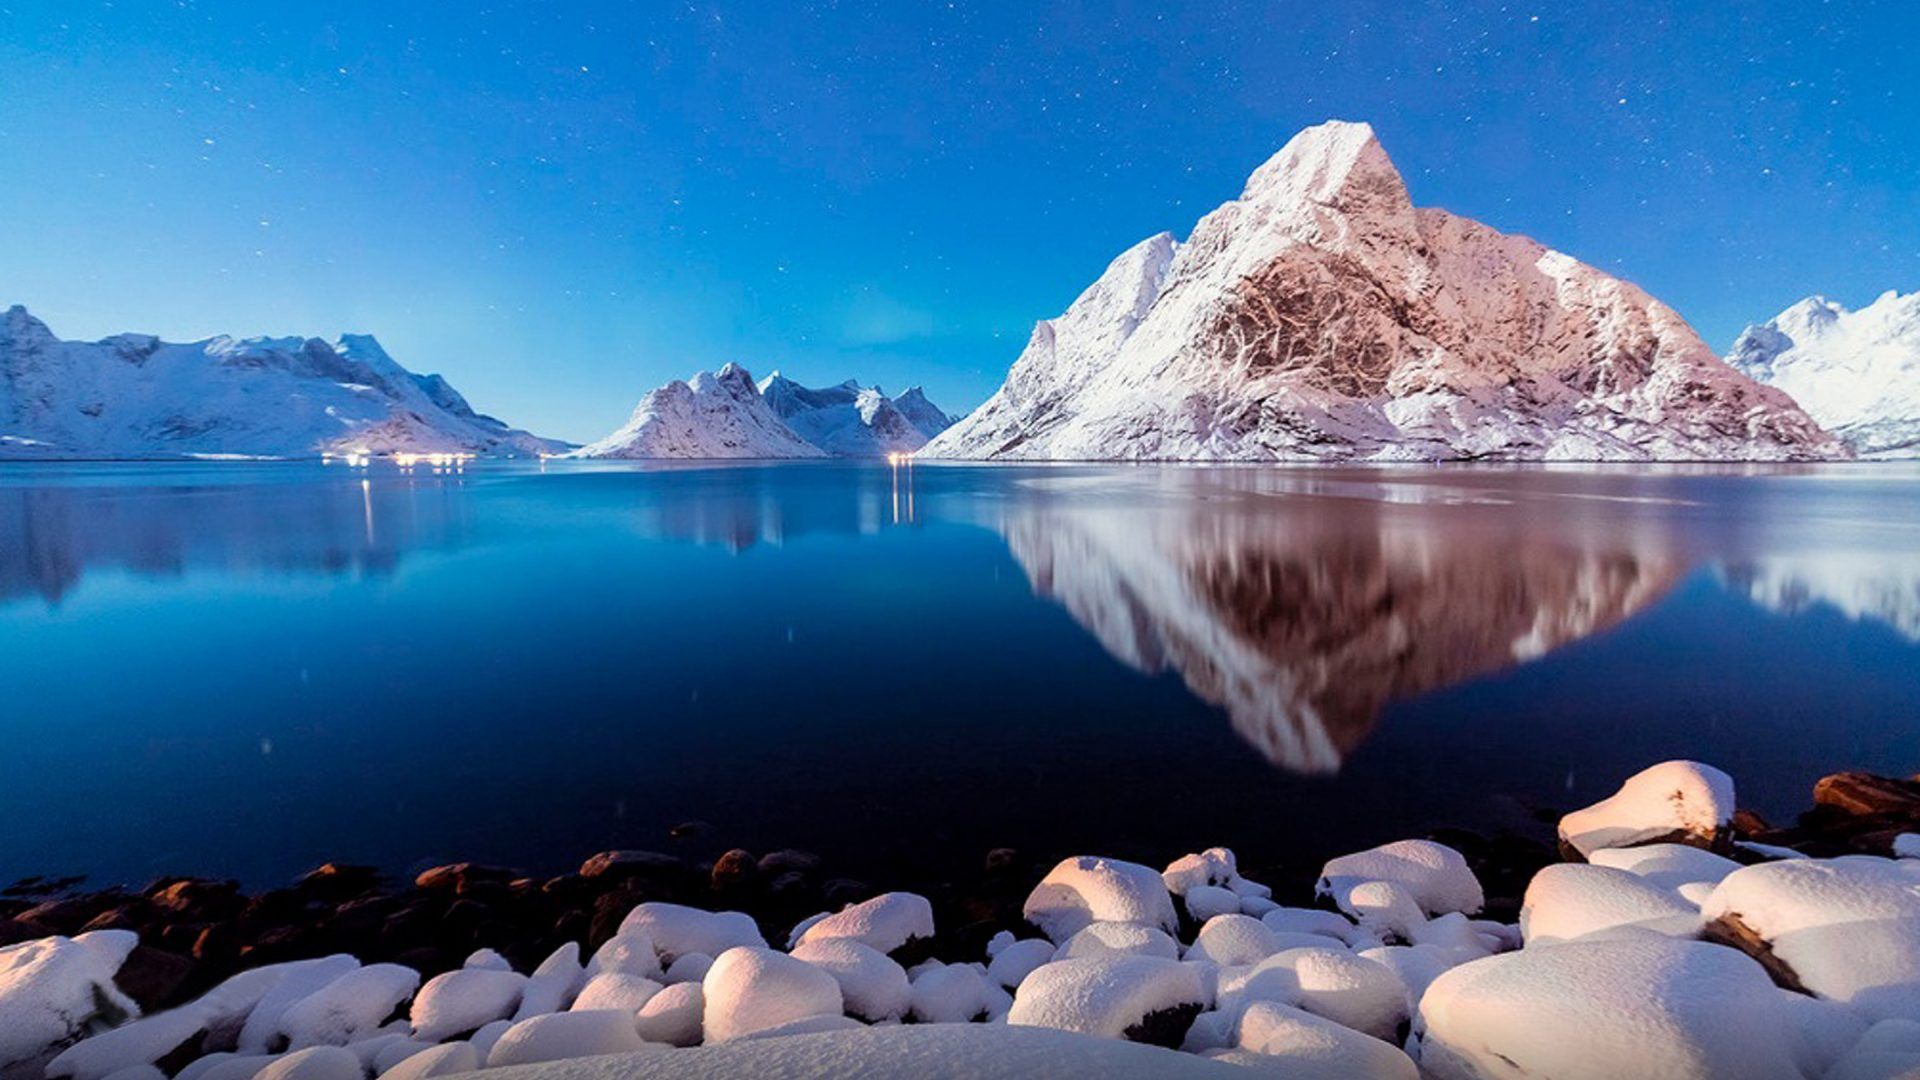 Winter Peaceful Lake Shore Stones, Snow Mountains, Blue Reflection